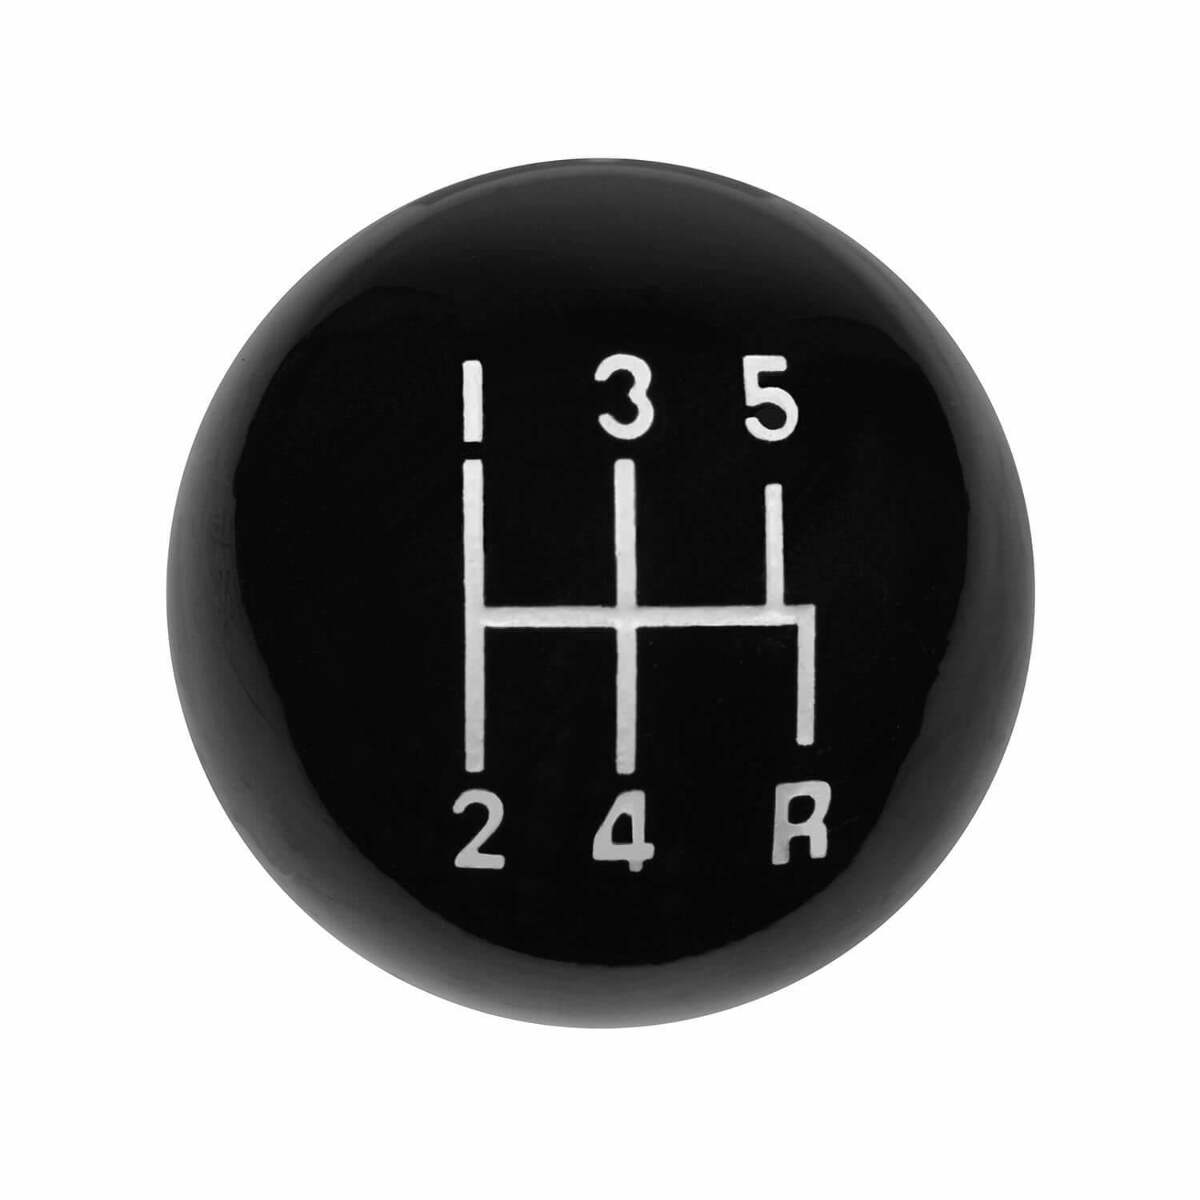 Hurst Shift Knob - Black 5 Speed M12x1.75 Threads - 1630114